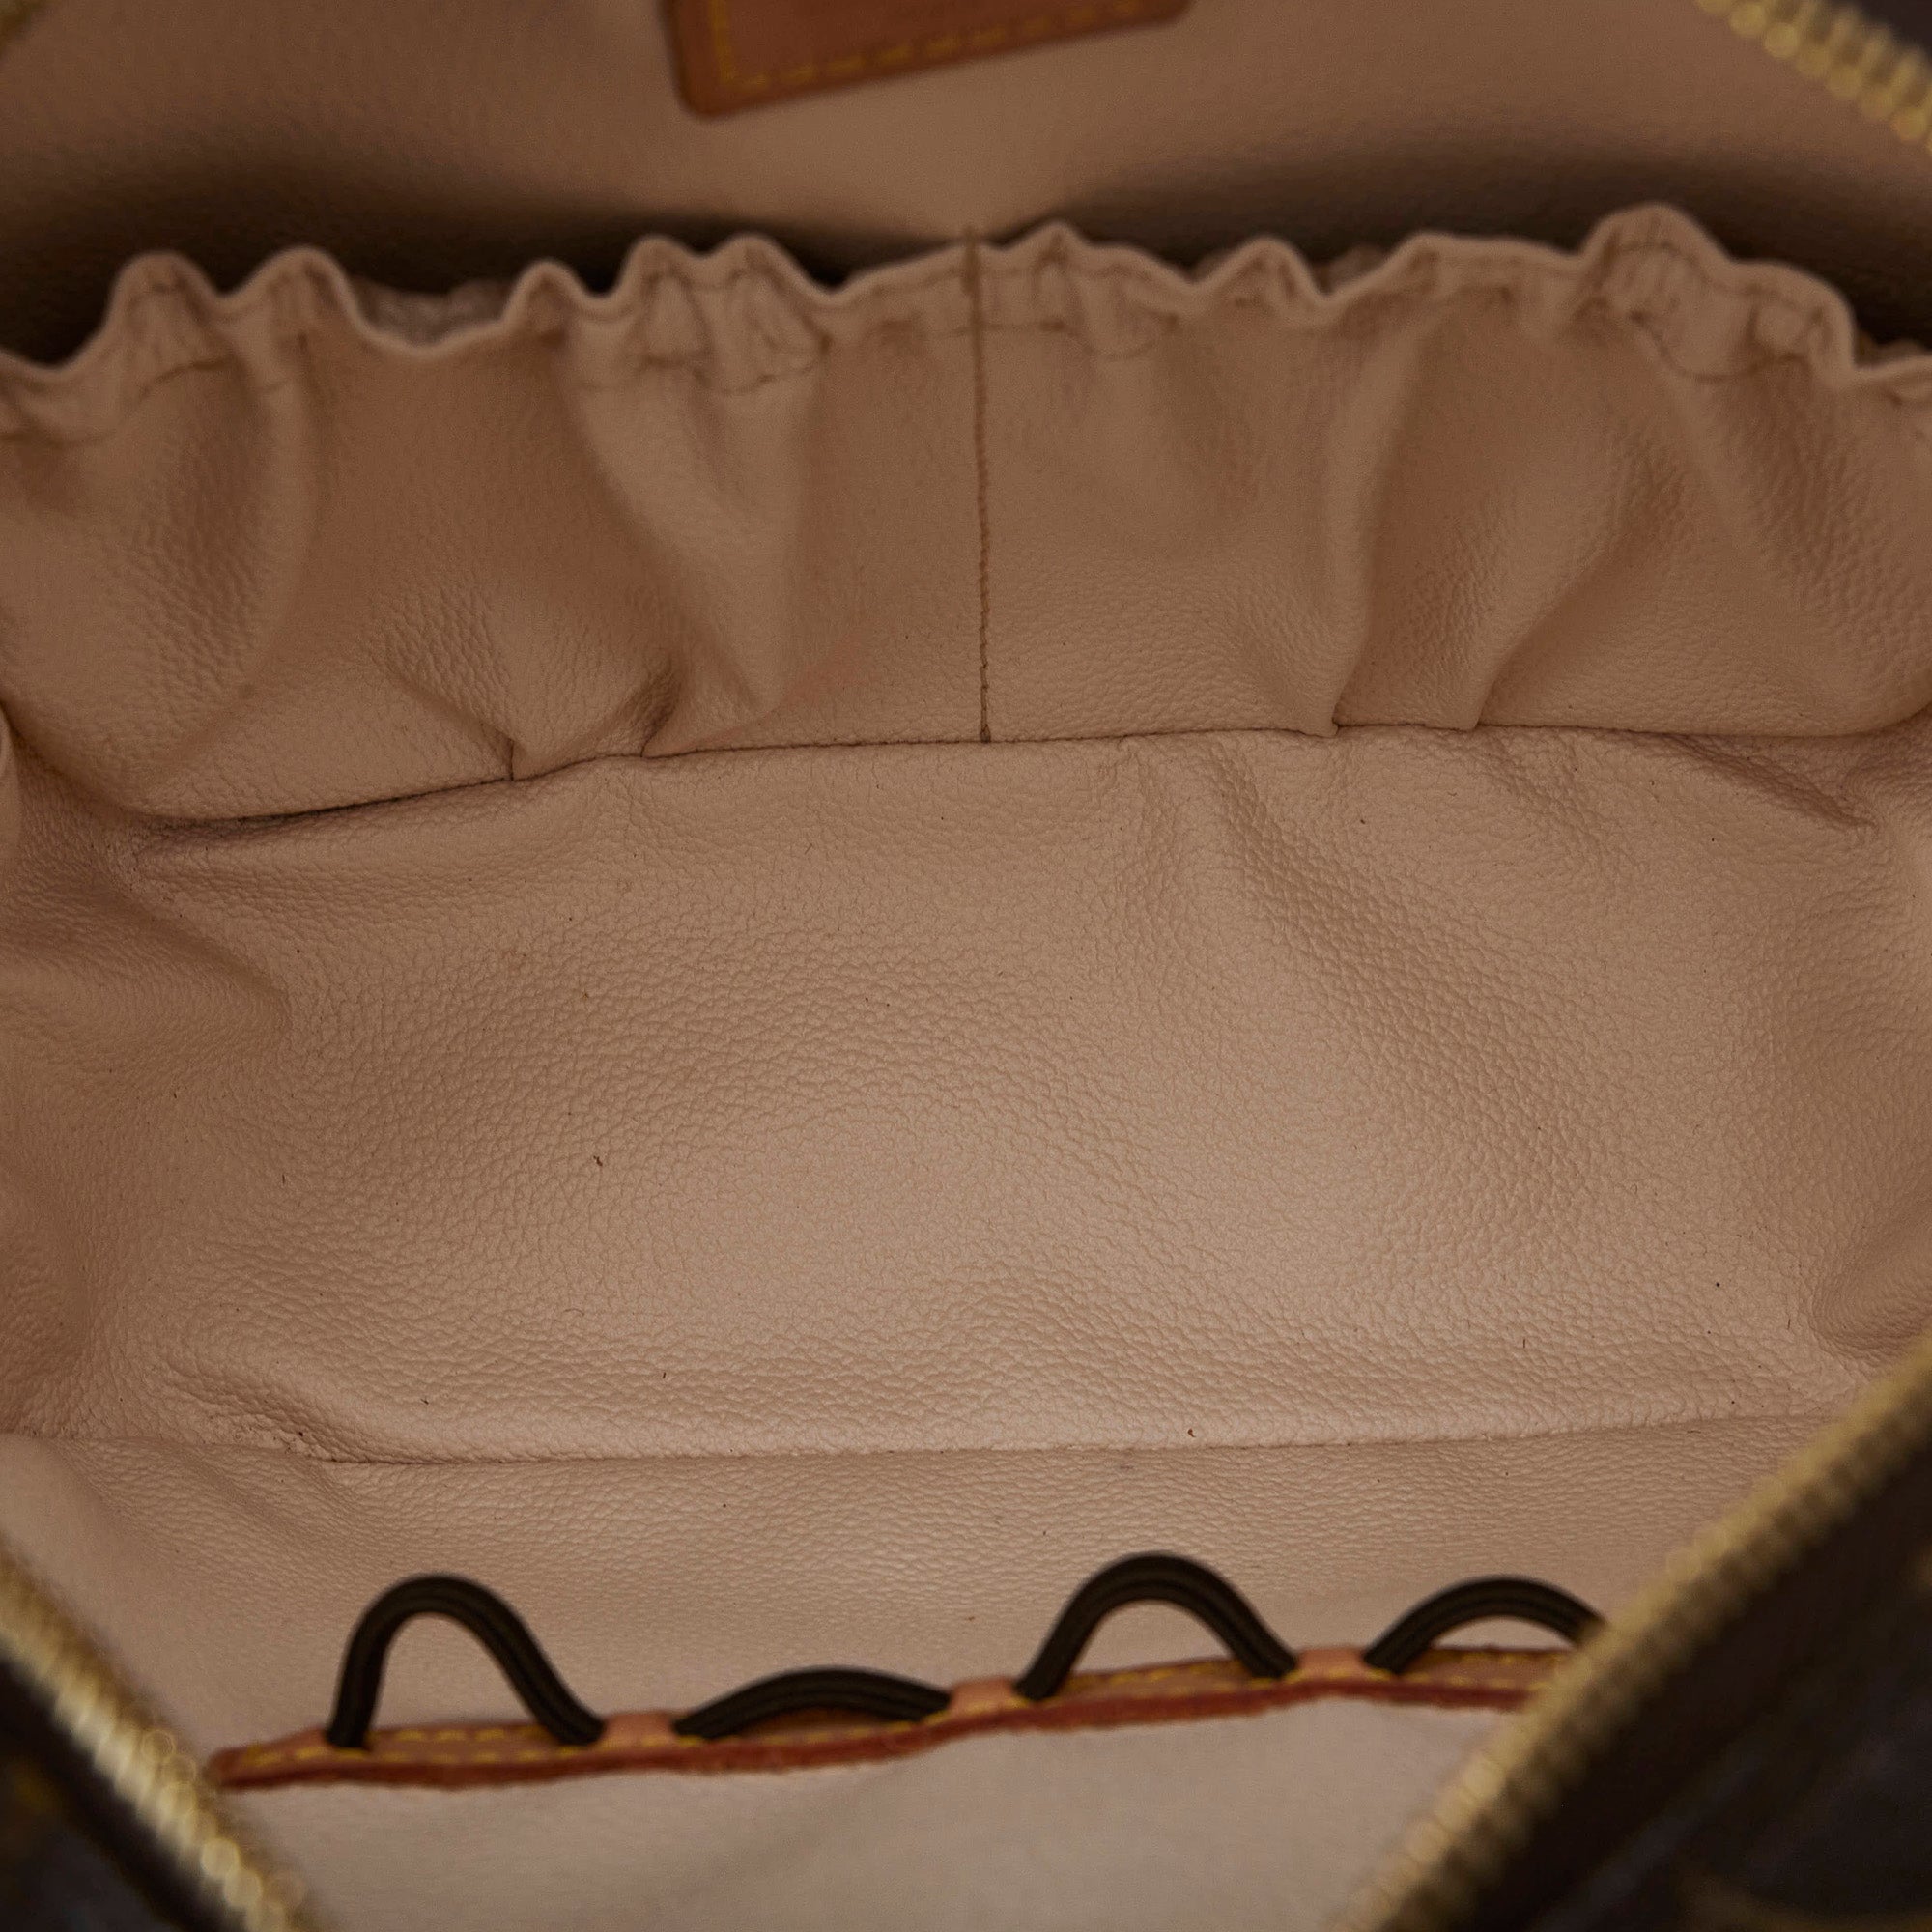 Spontini fabric handbag Louis Vuitton Brown in Cloth - 35428368